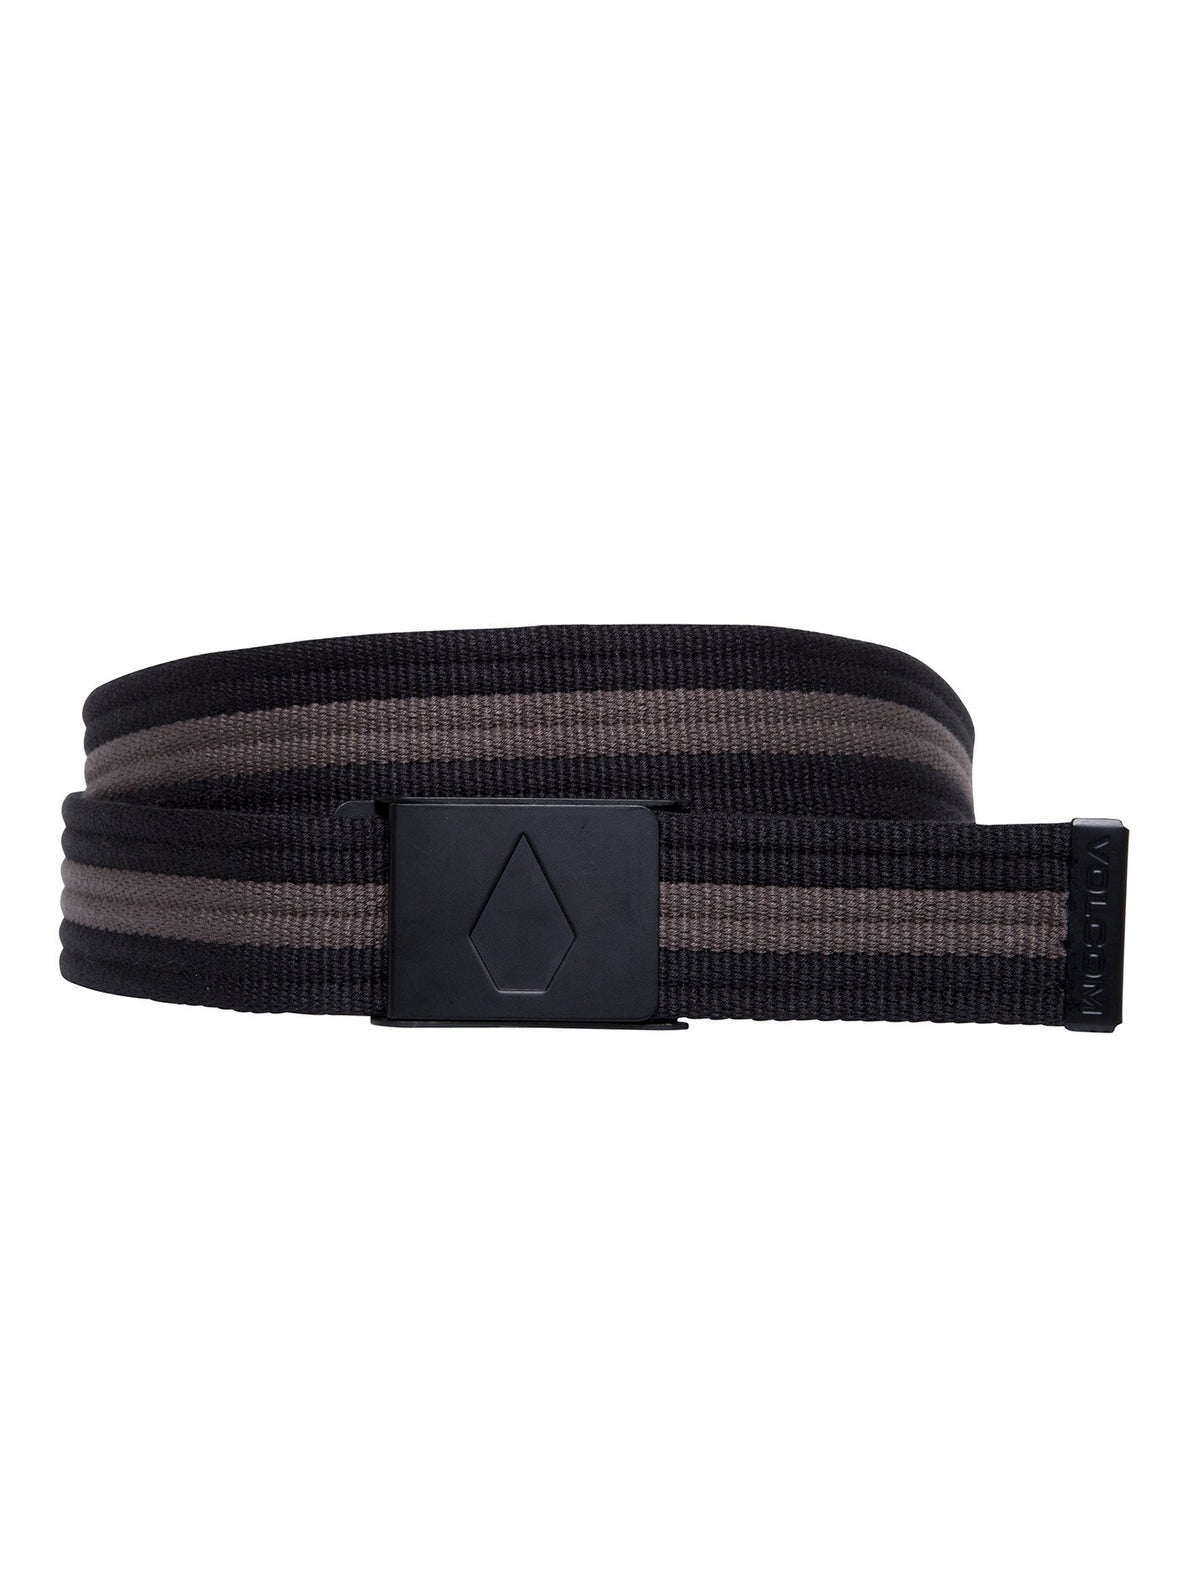 Strap Web Belt - Black (D5911951_BLK) [F]